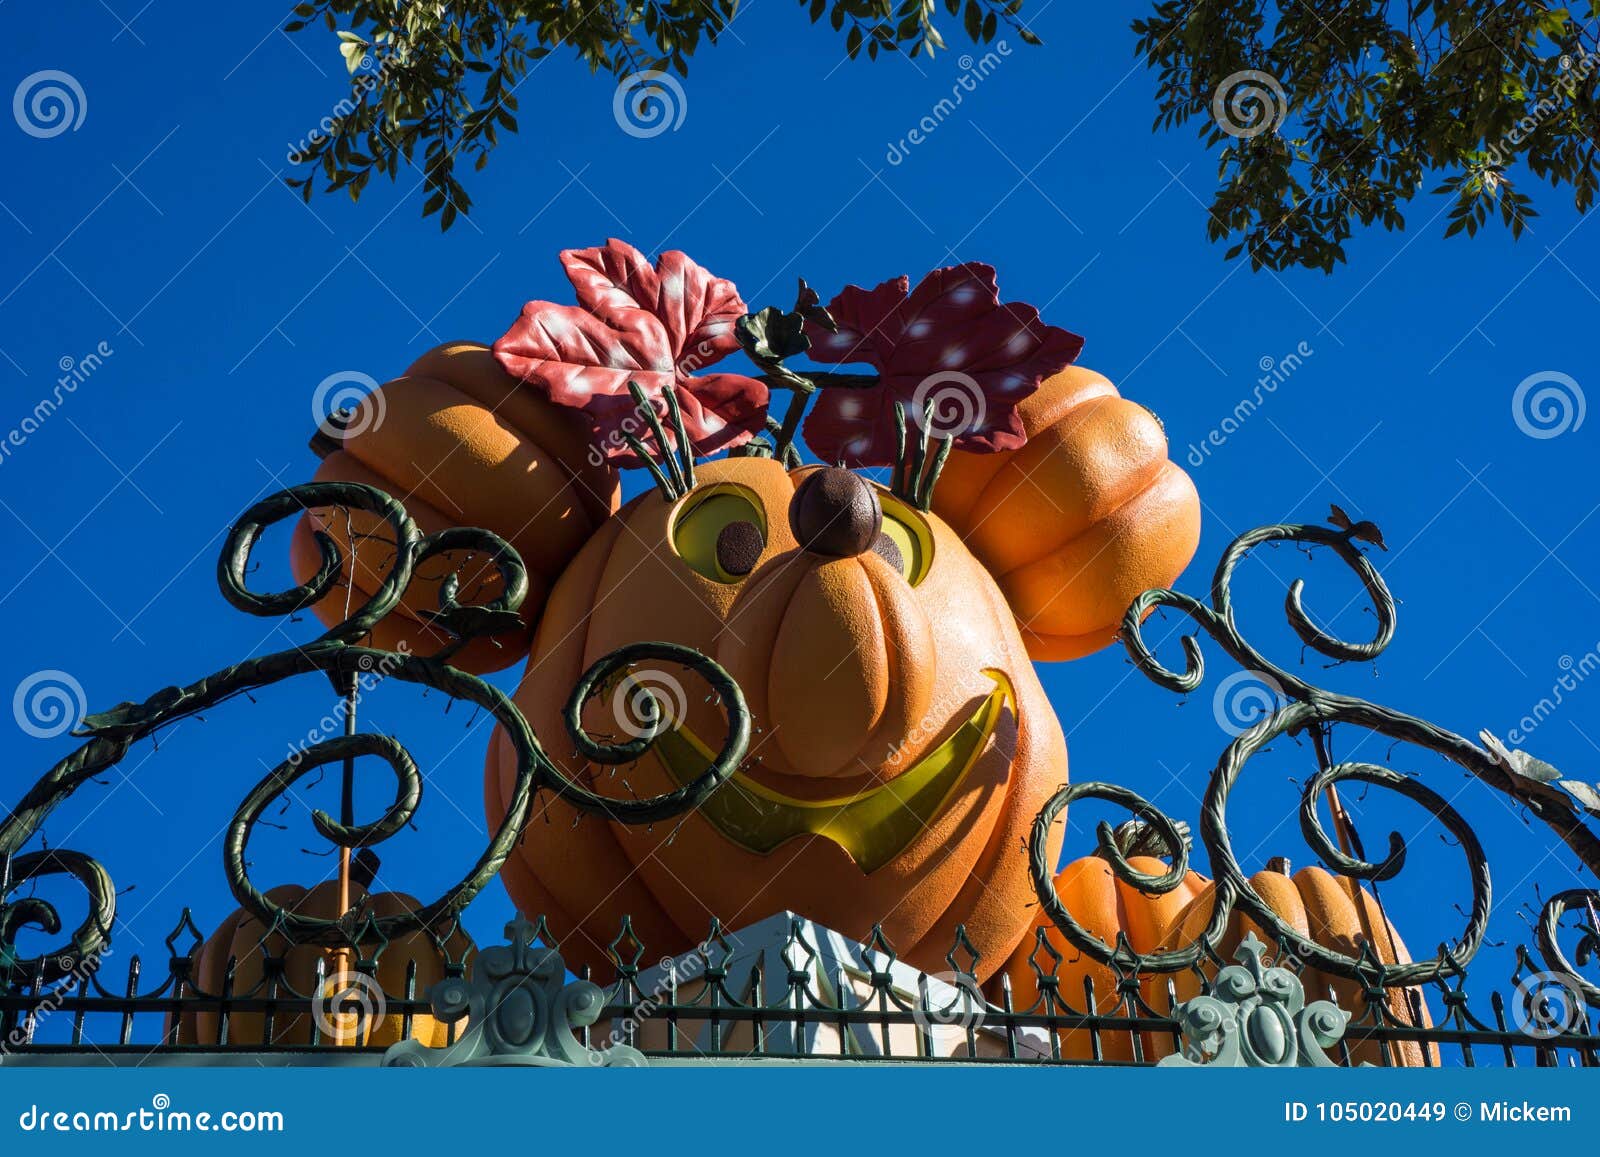 Disneyland Halloween Decor Minnie Mouse Editorial Stock Image ...